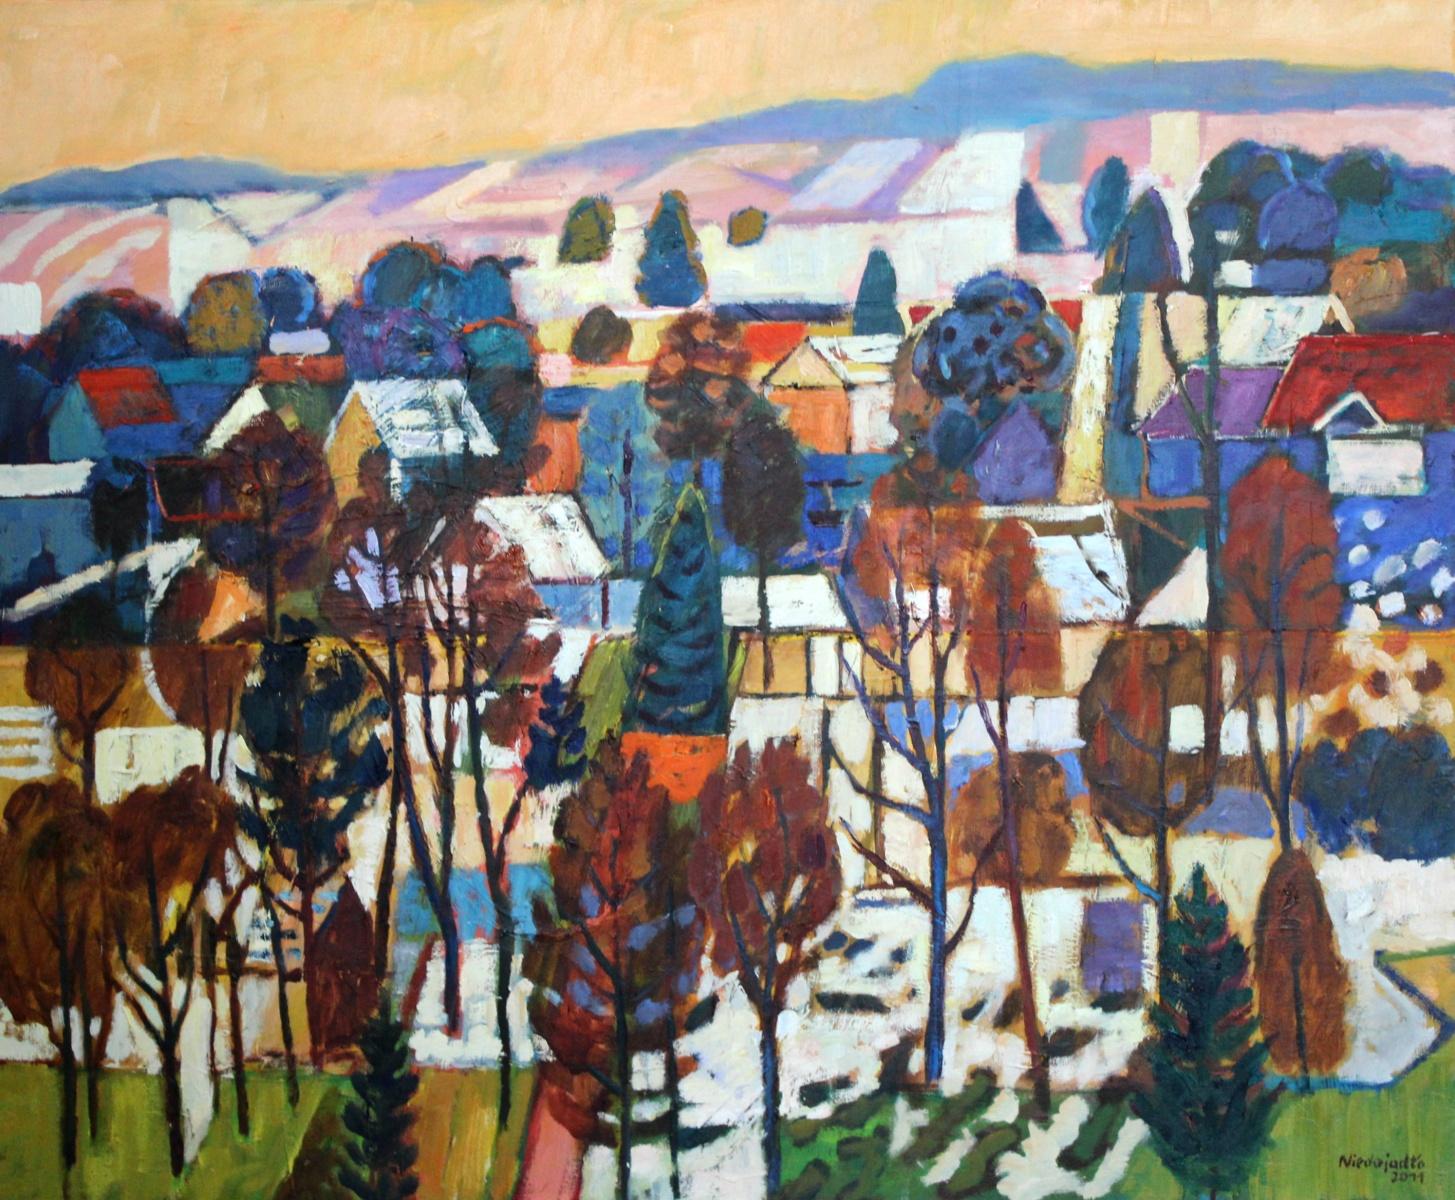 Marek Niedojadło Figurative Painting - Road to a park - XXI Century, Contemporary Oil Landscape Painting, Colourful